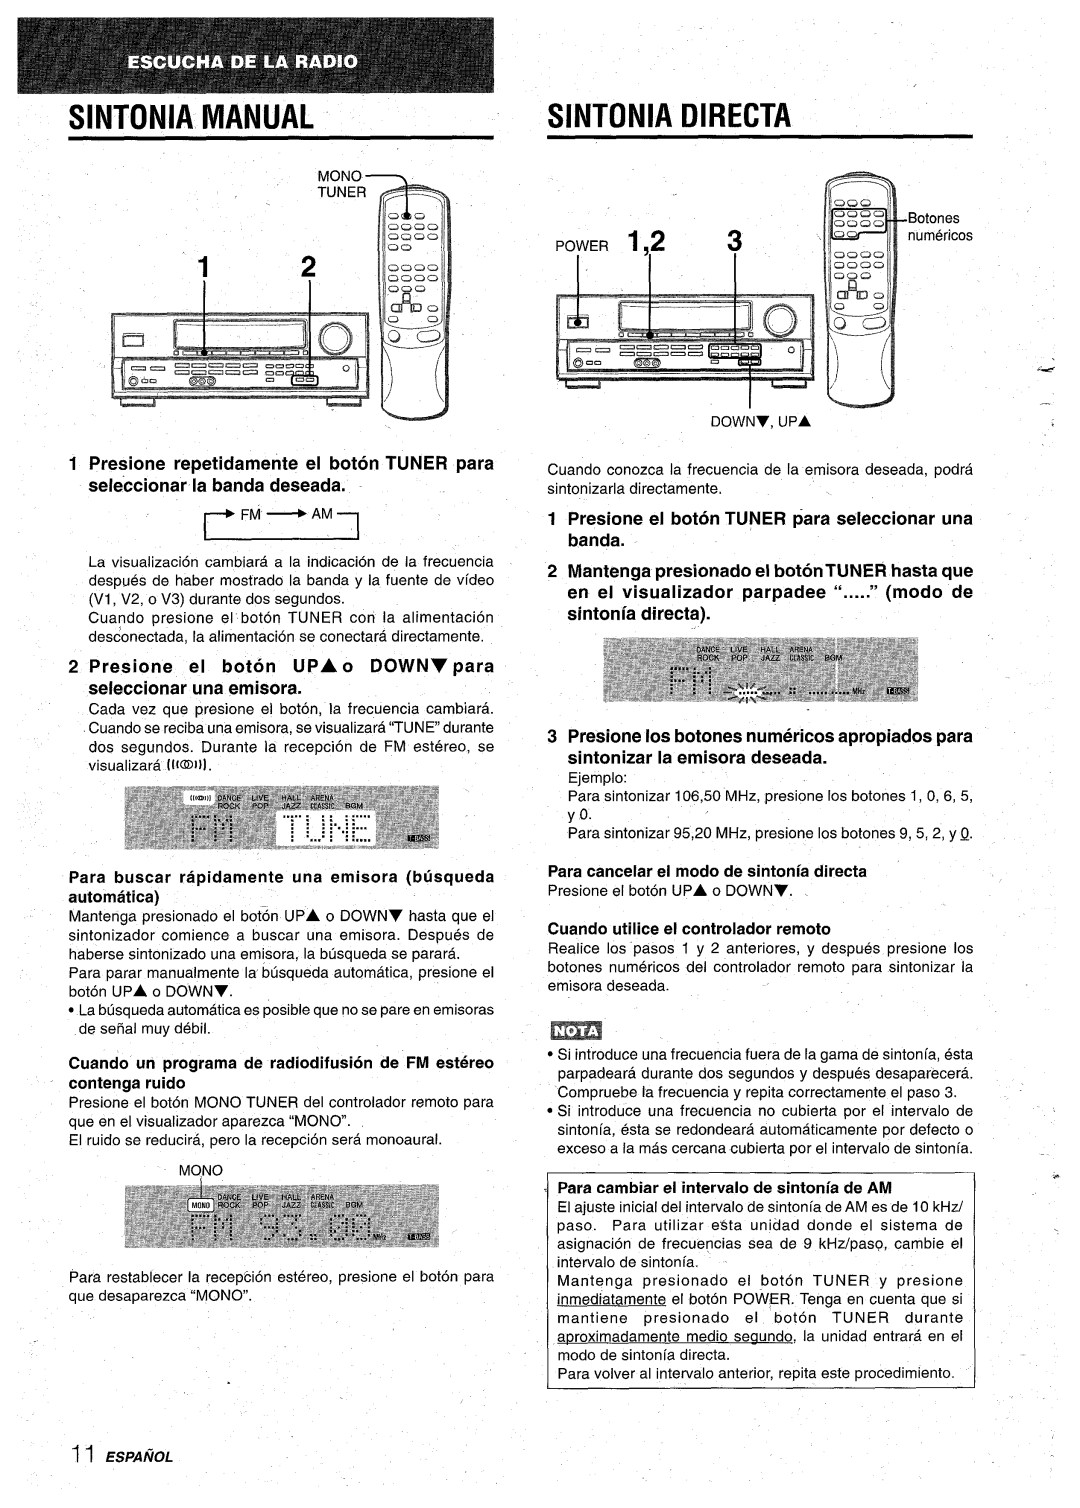 Aiwa AV-D30 manual Sintonia Manual, Sintonia Directa, Presione el boton UPA o DOWNV para seleccionar una emisora 